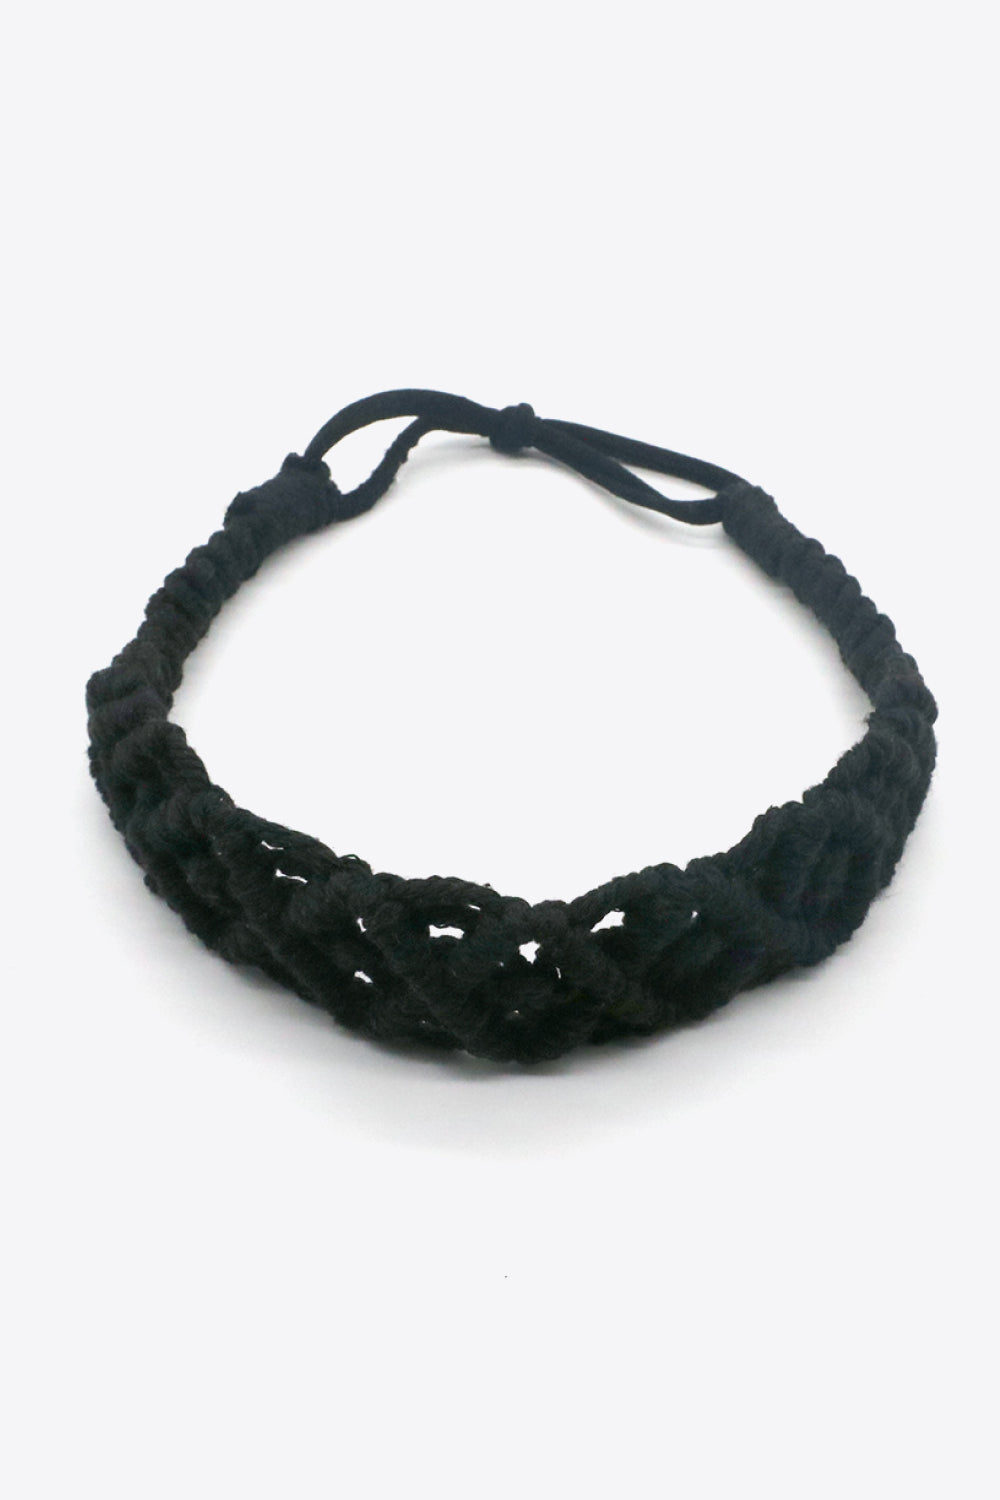 Knitted Headband